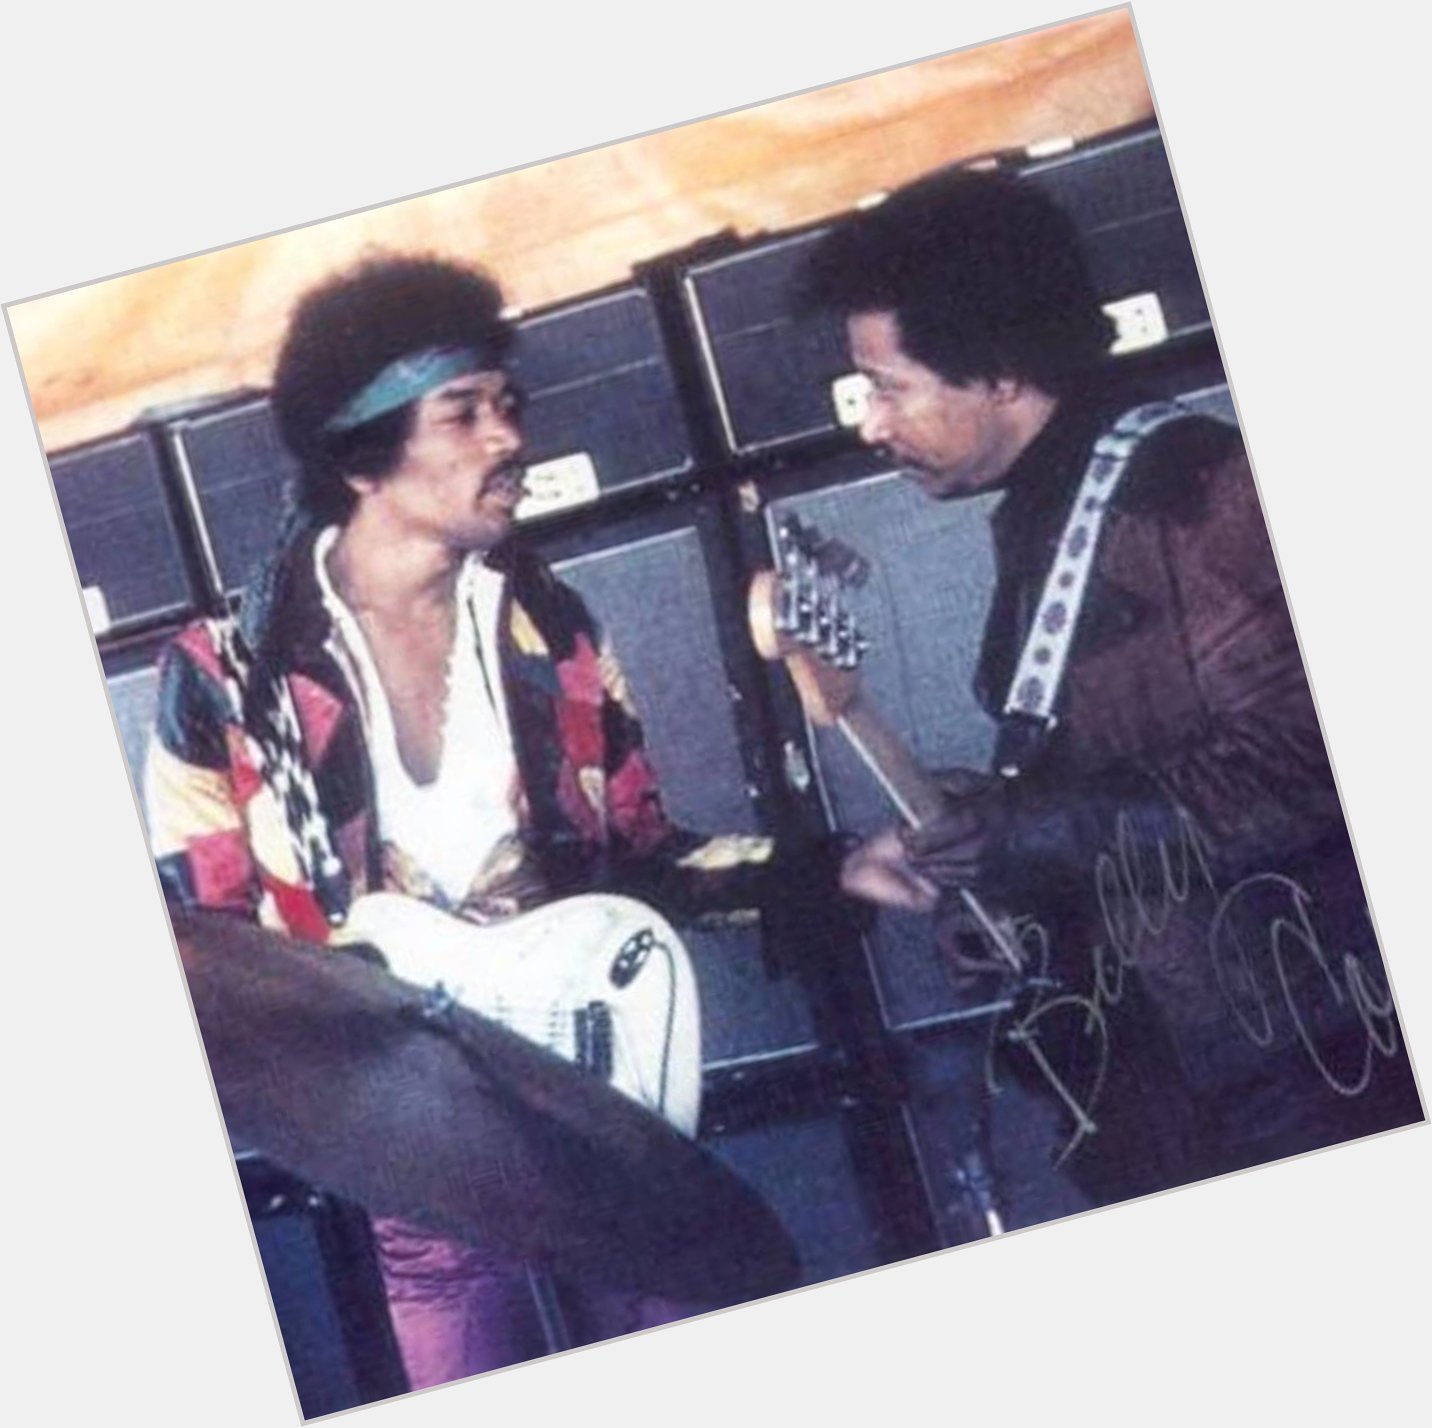 Happy 78th Birthday to legendary Jimi Hendrix bassist Billy Cox! 